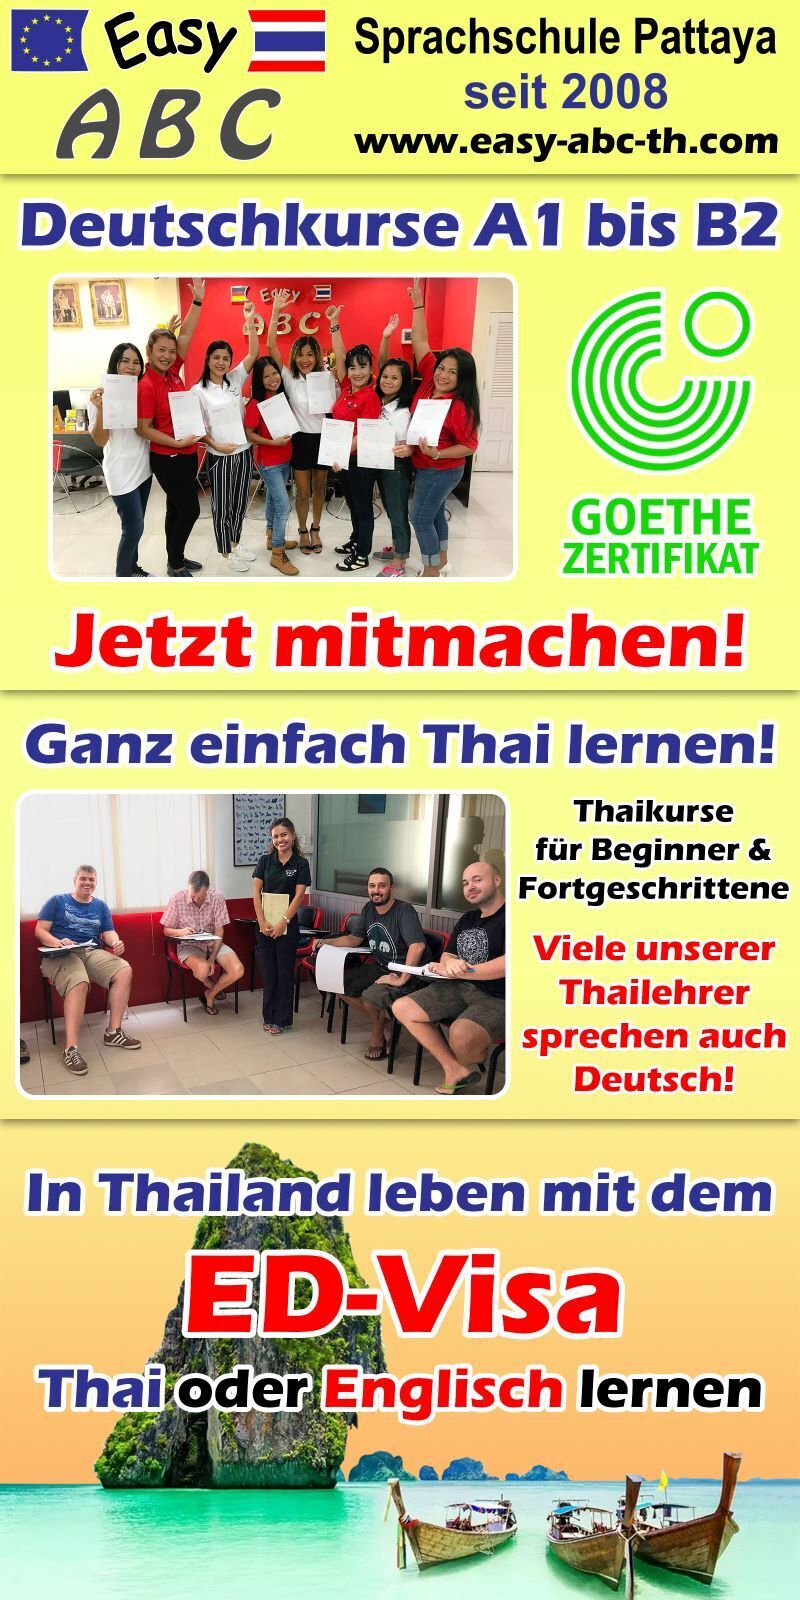 Easy abc sprachschule pattaya seit 2008 thaikurse deutschkurse ed visa